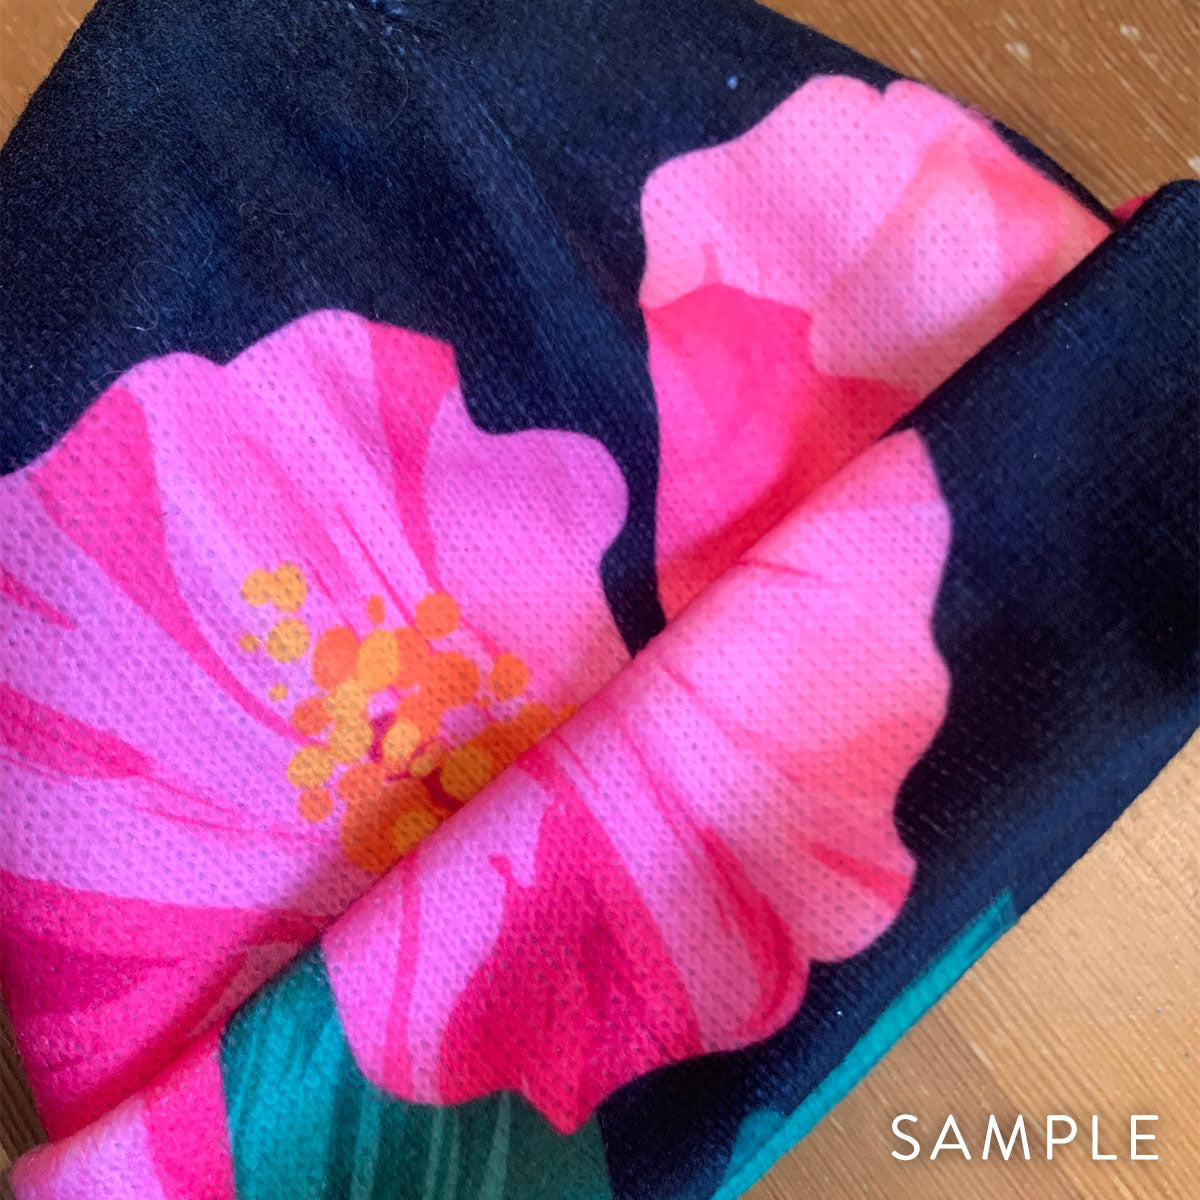 CNMI Saipan Tinian Rota Black Tribal Unisex Crochet Knit Beanie Cap